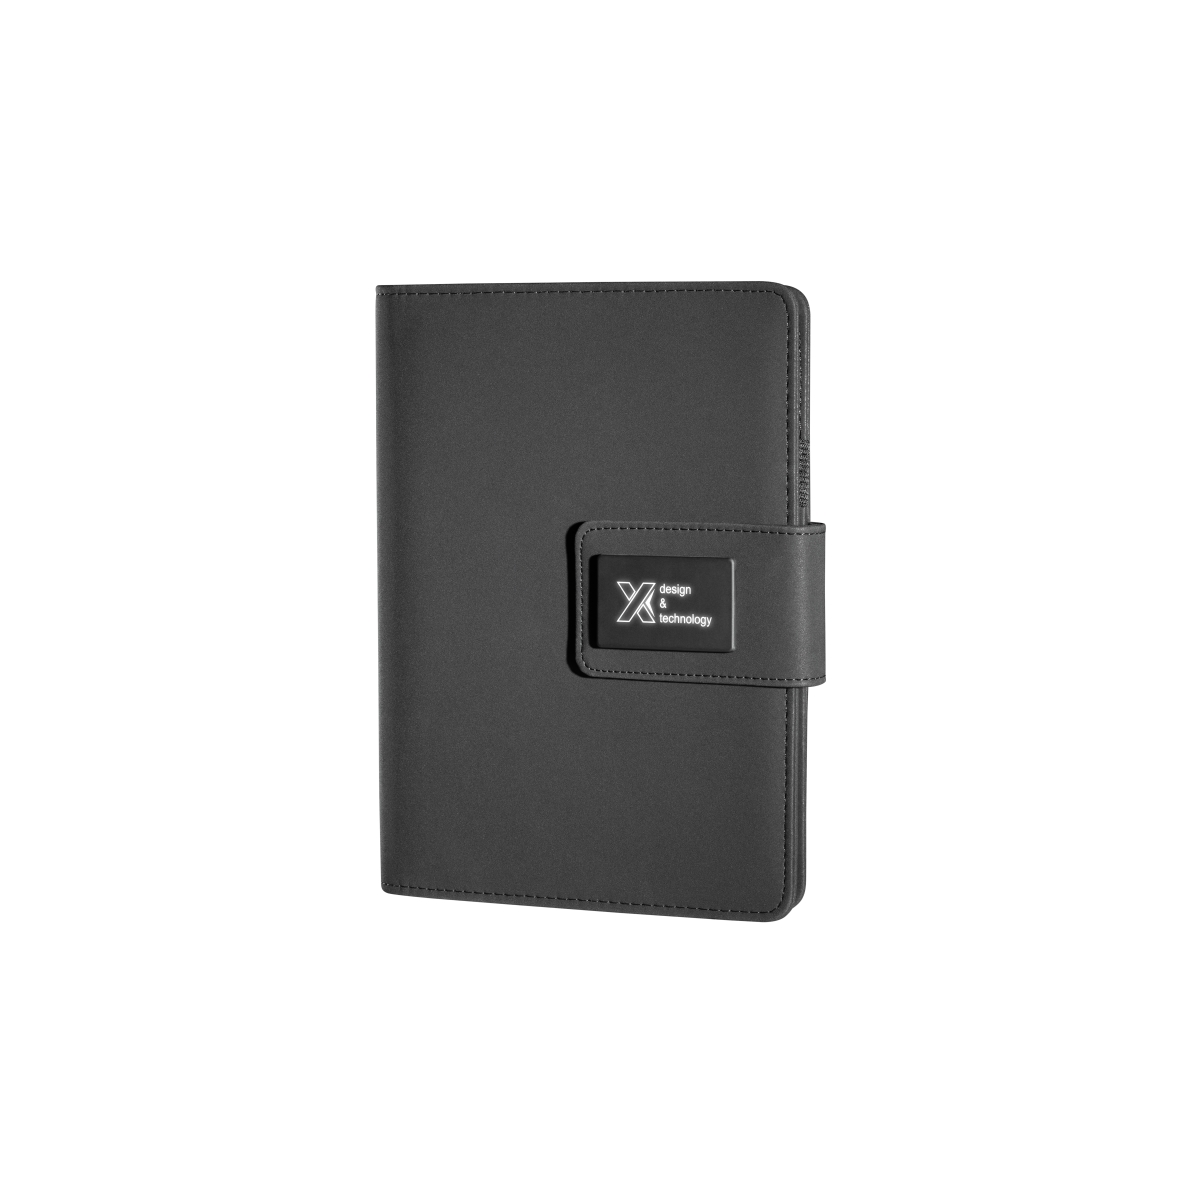 O16 - Power notebook A5